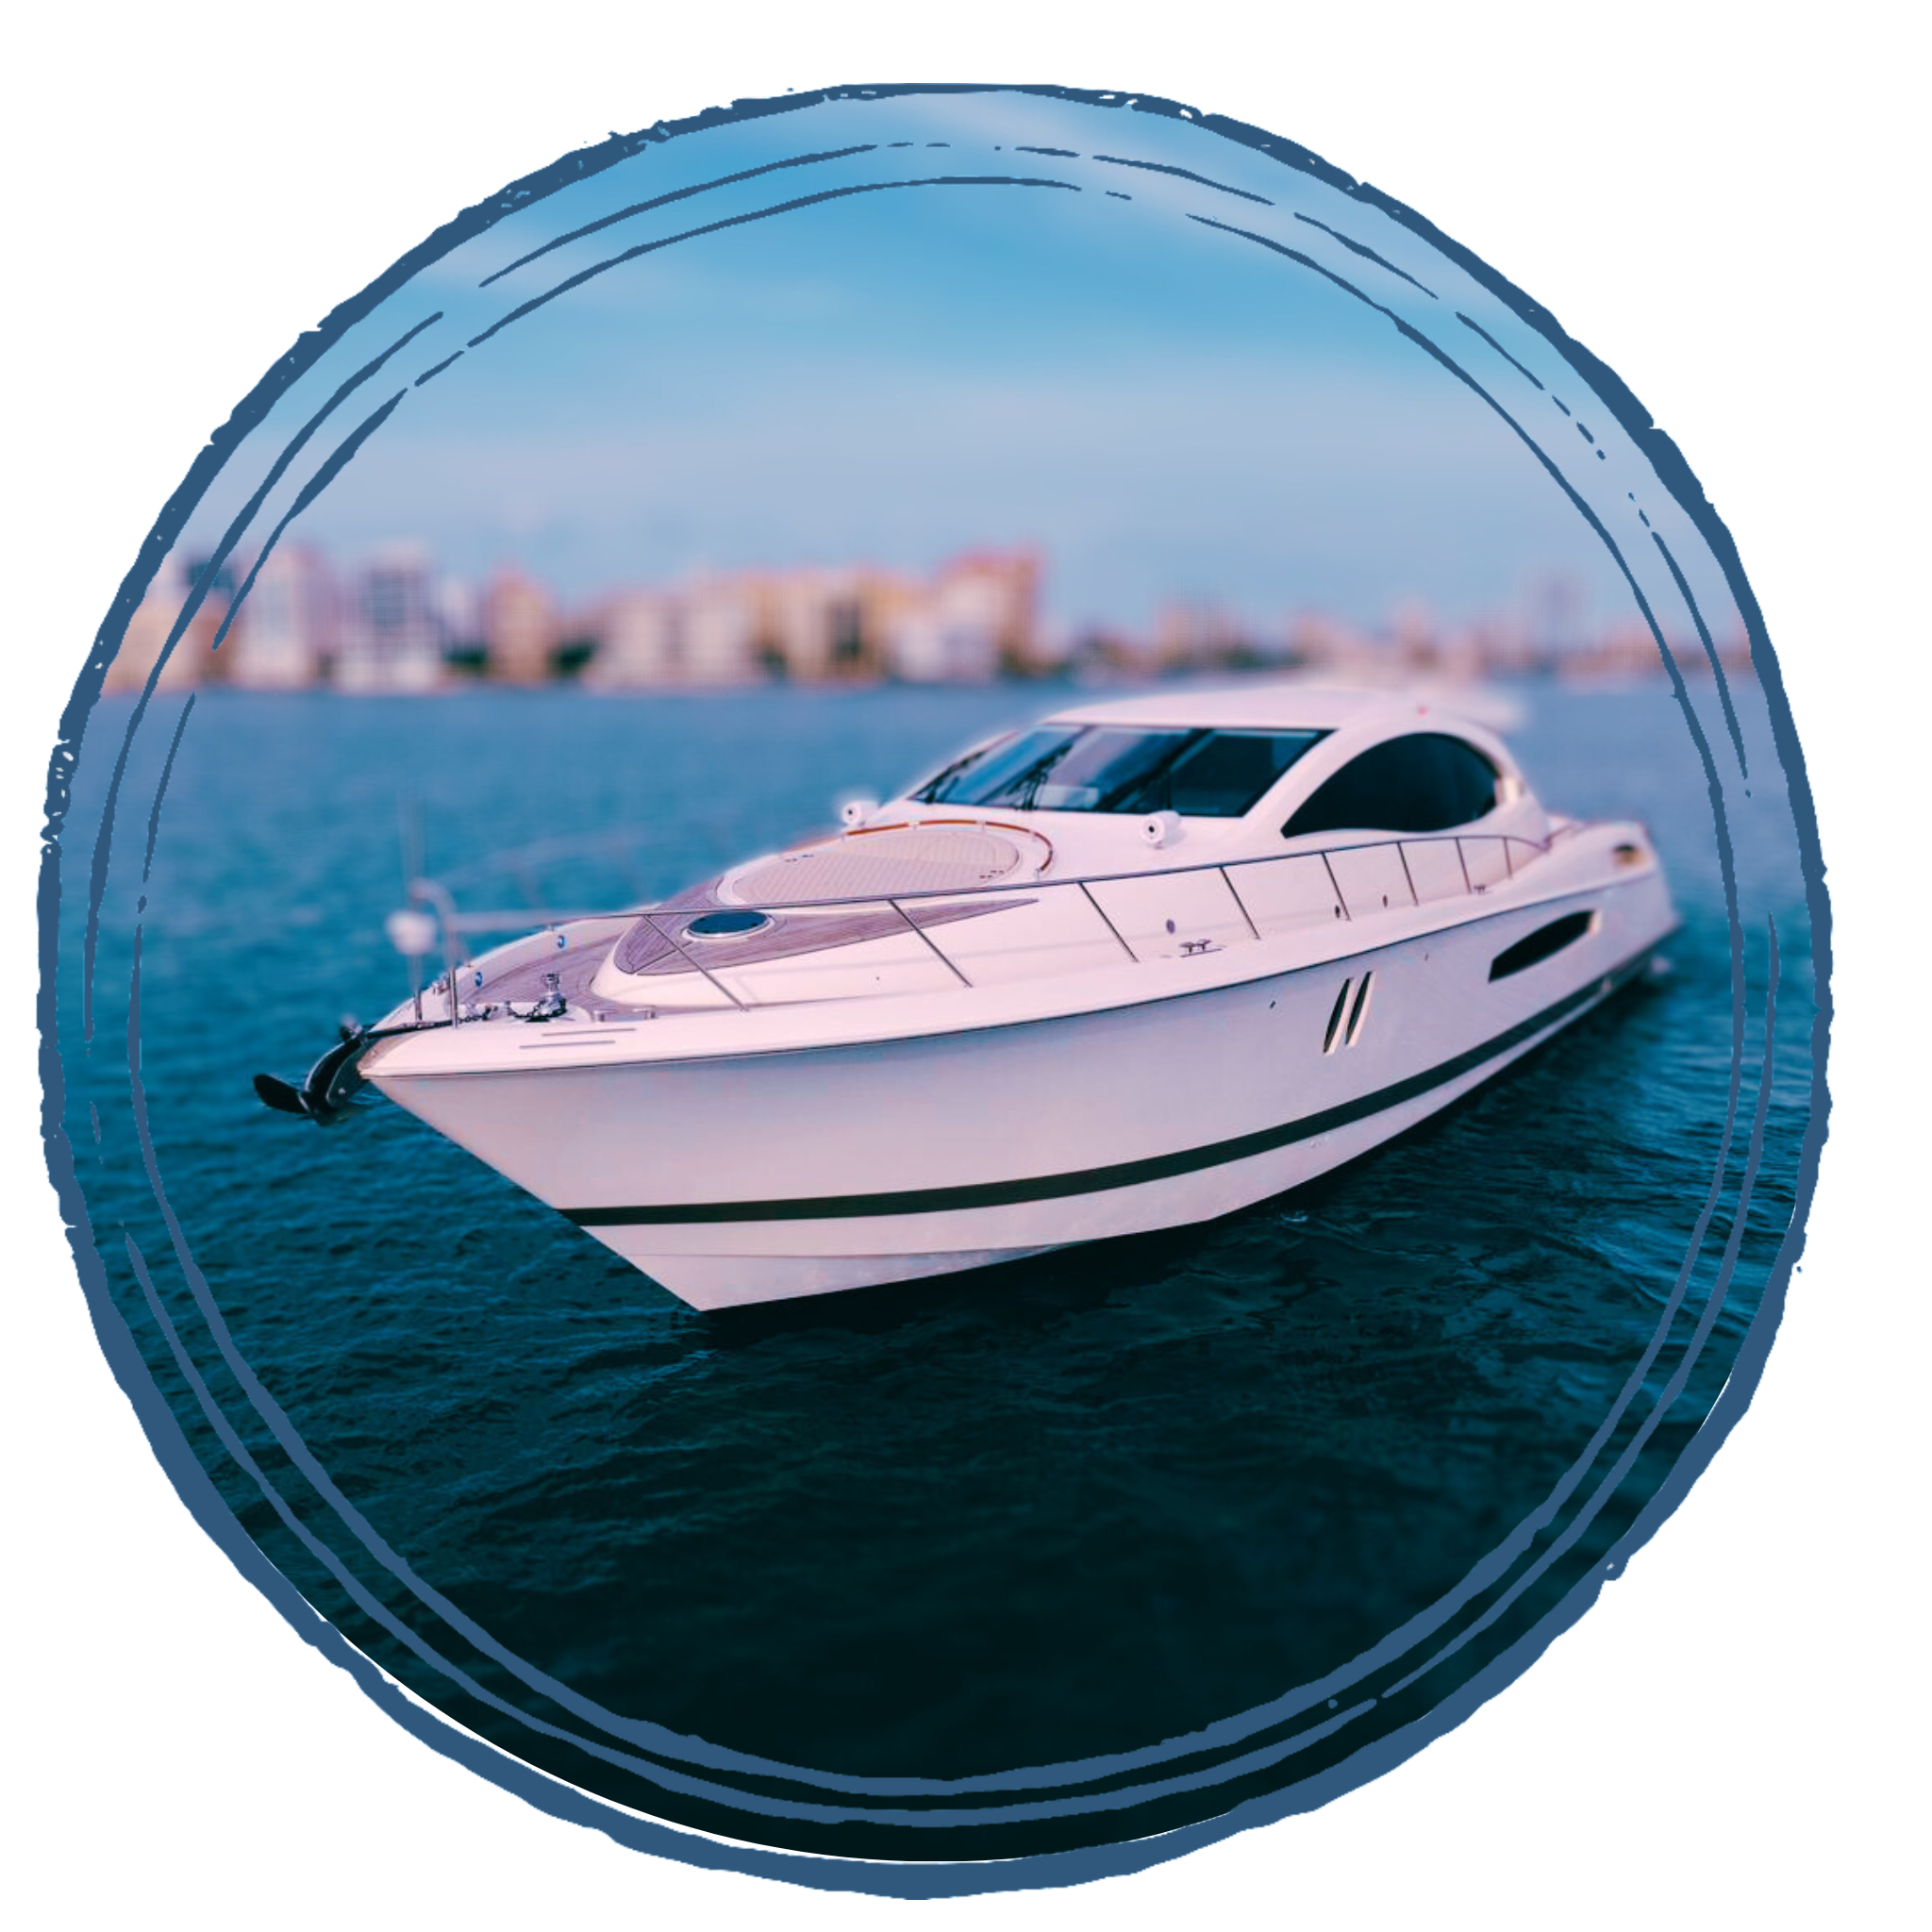 Tampas Best Yacht Rental